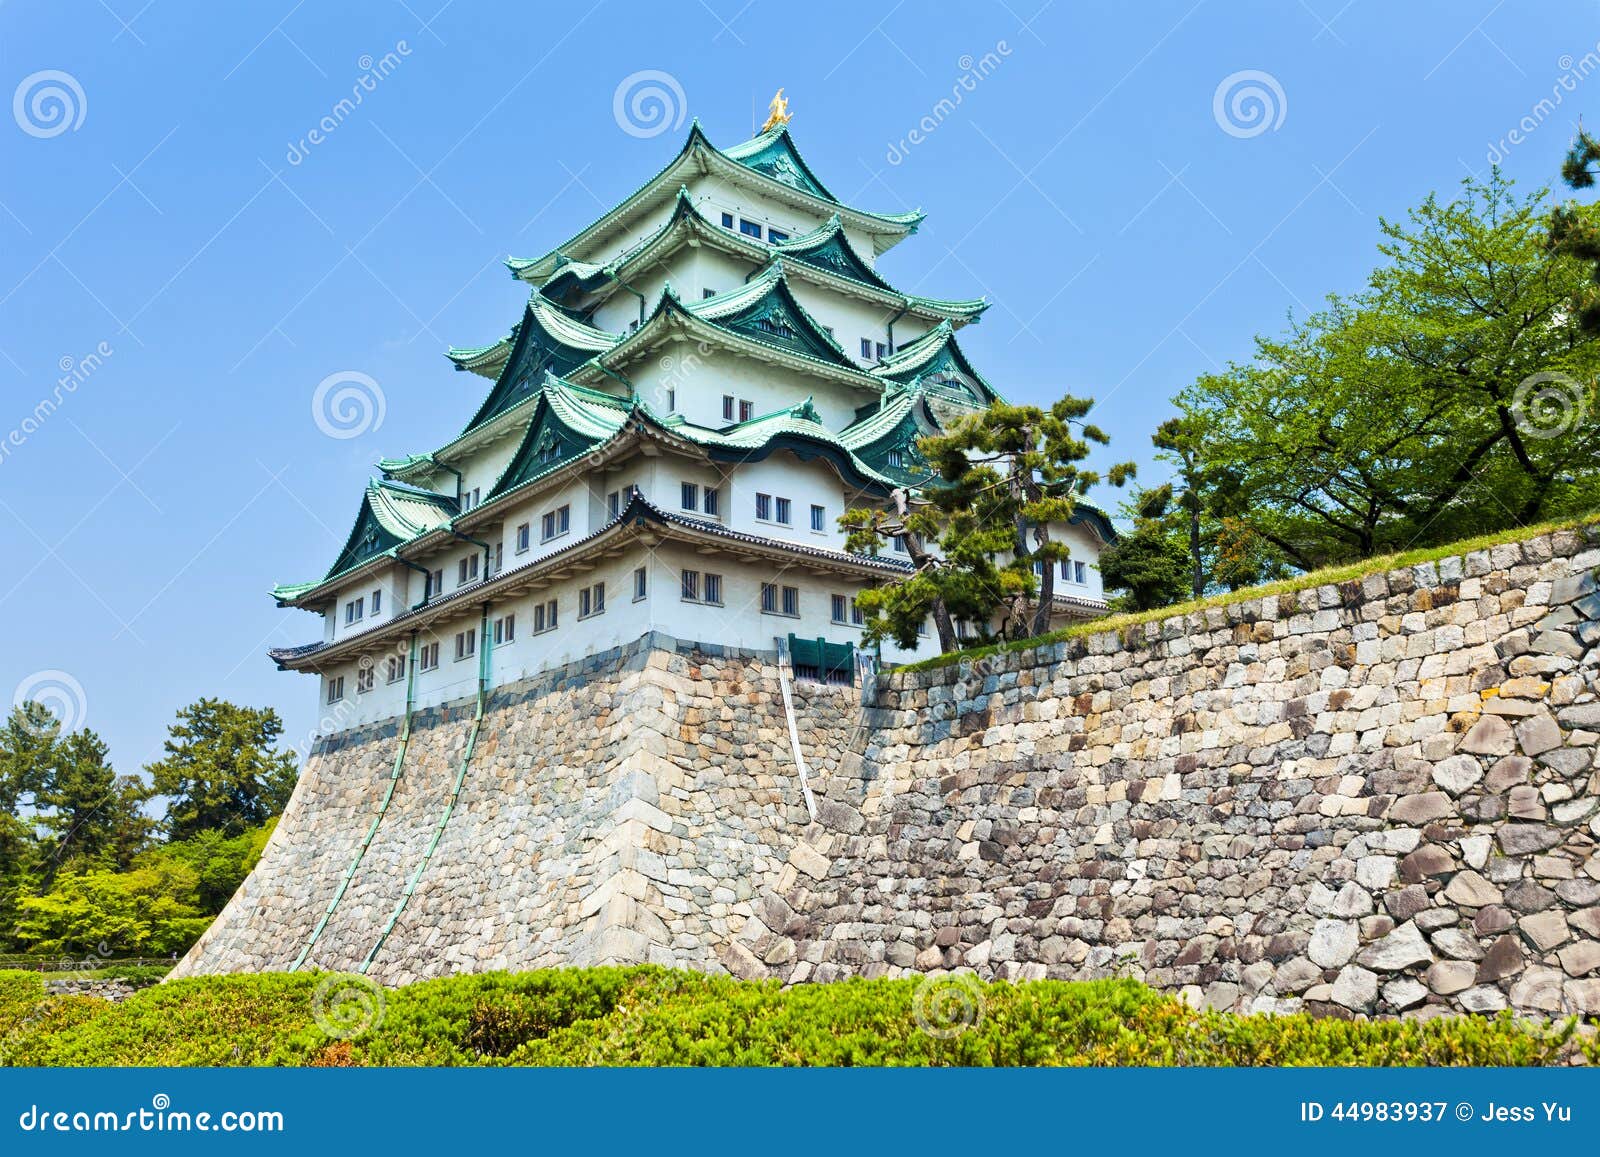 nagoya castle in japan